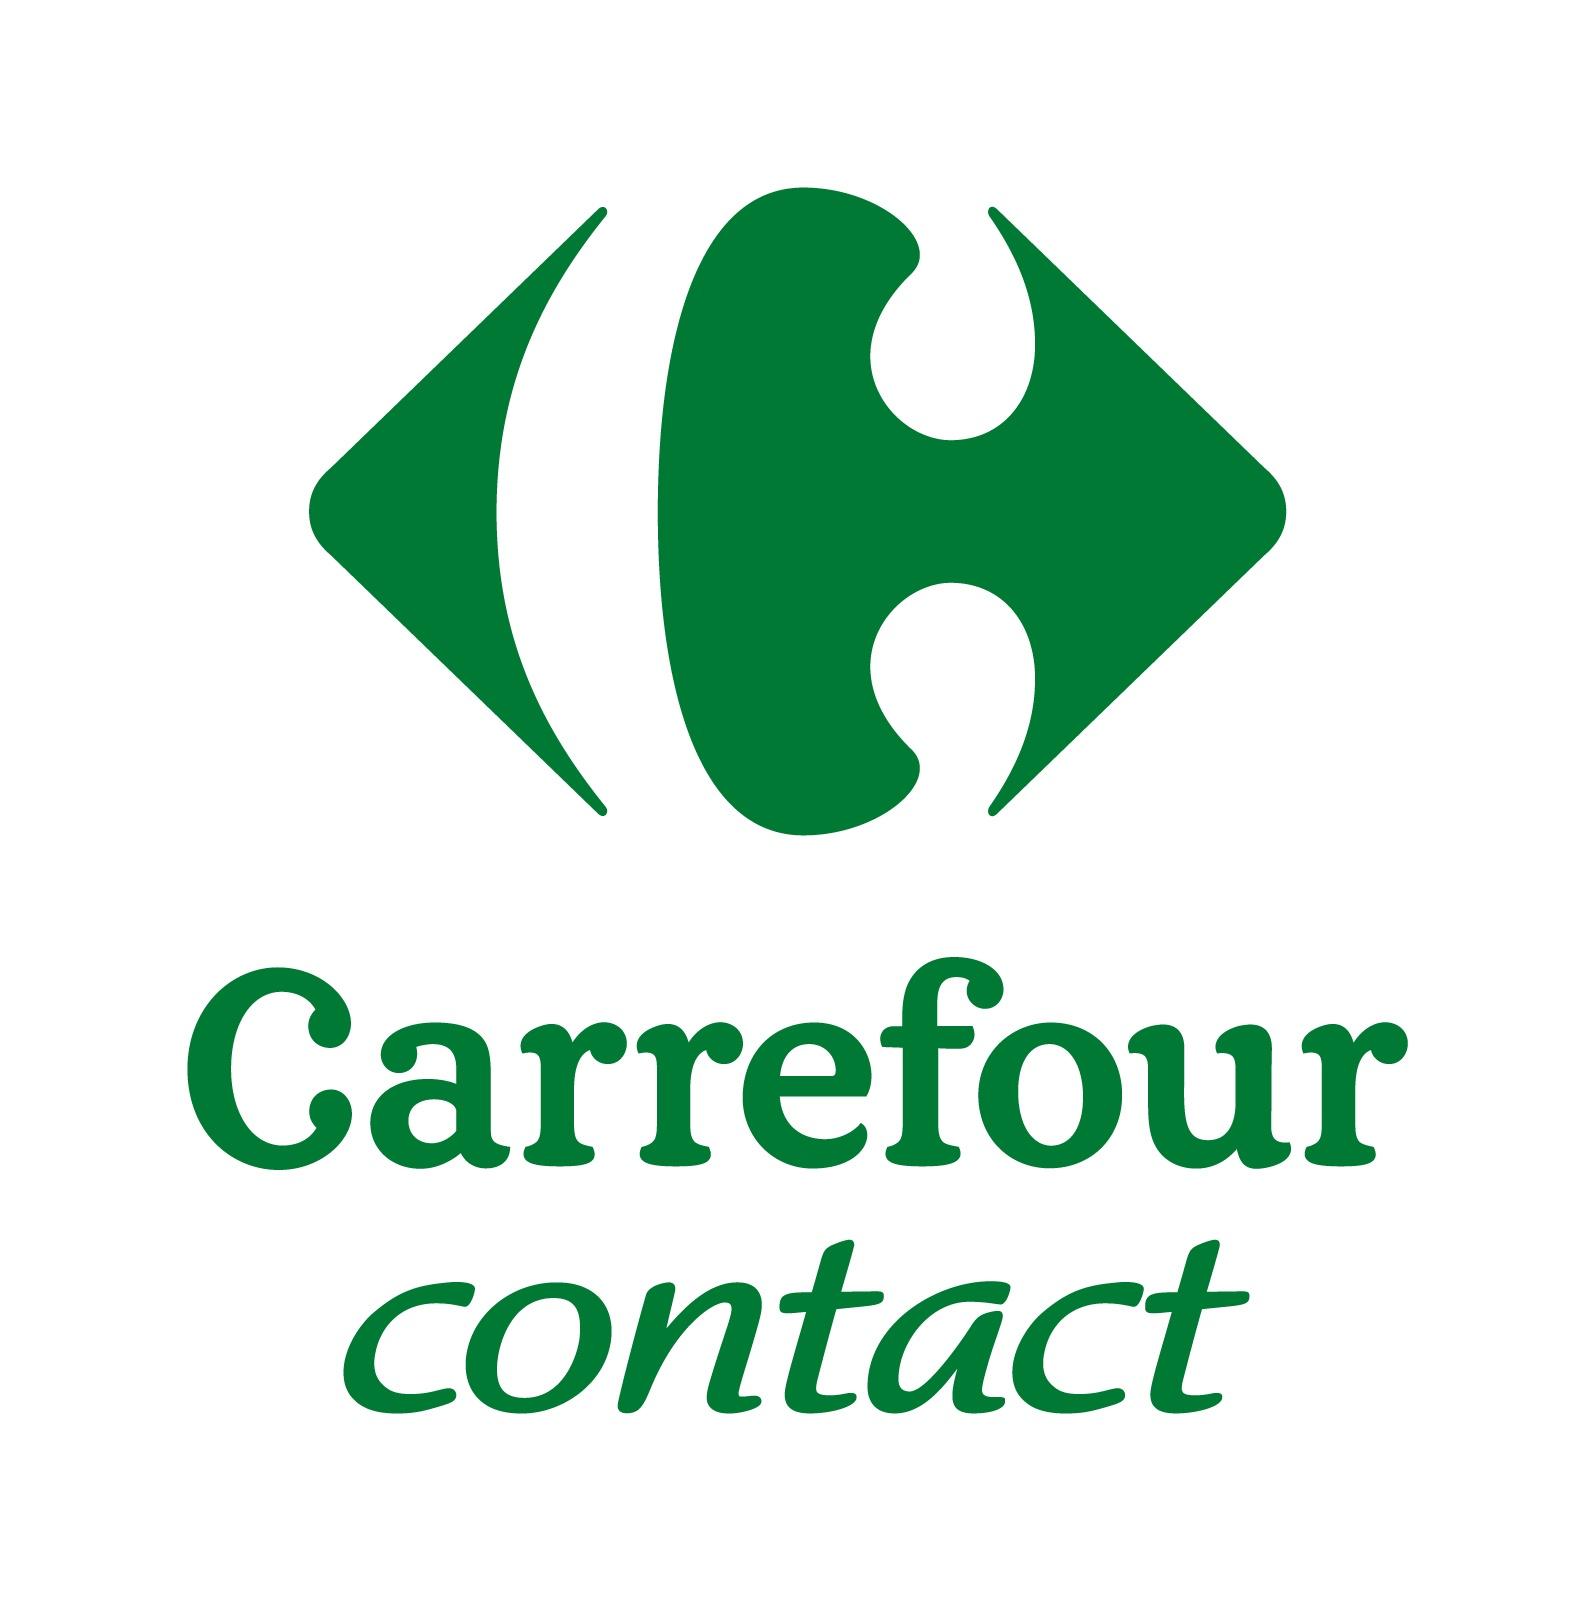 Carrefour Carcassonne